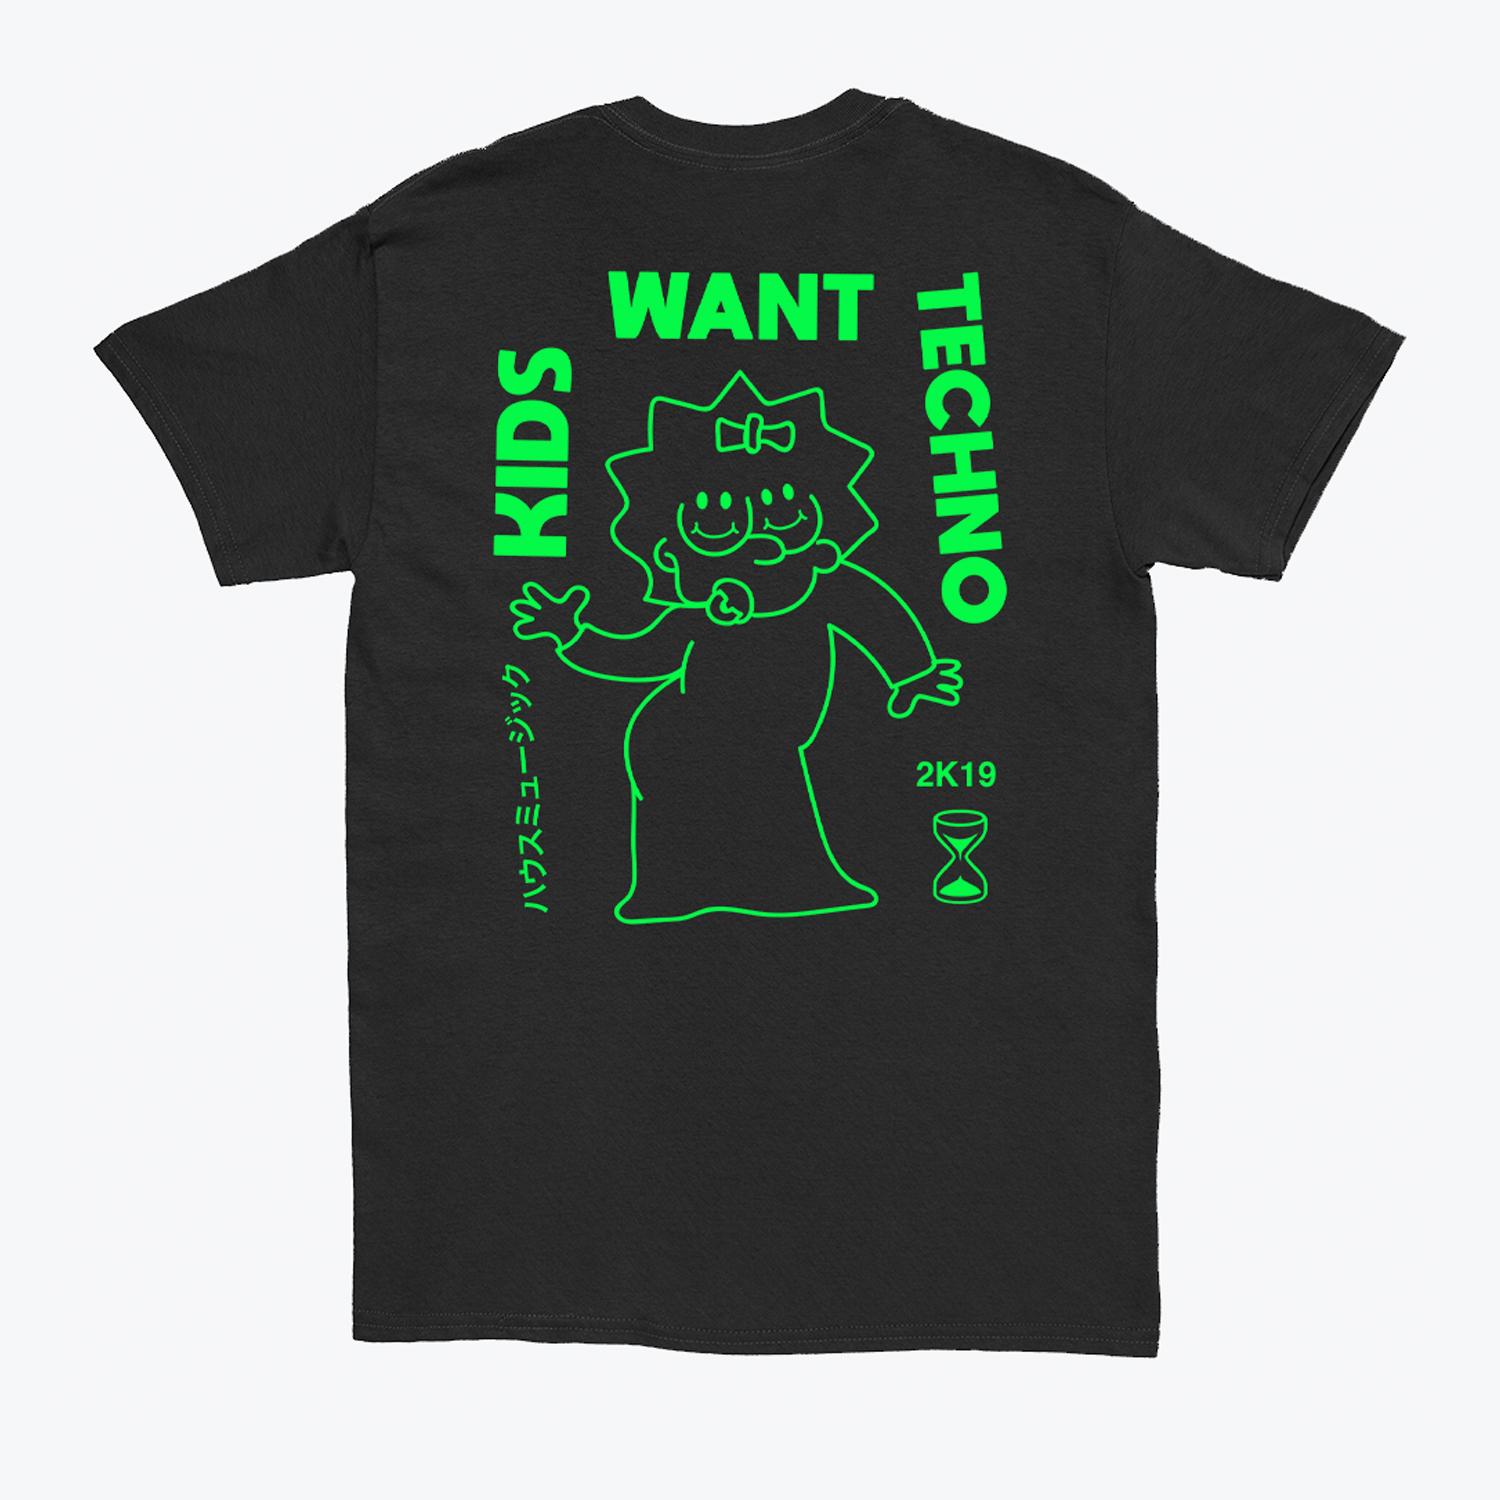 Luigi Brusciano's 'Kids Want Techno' T-shirt